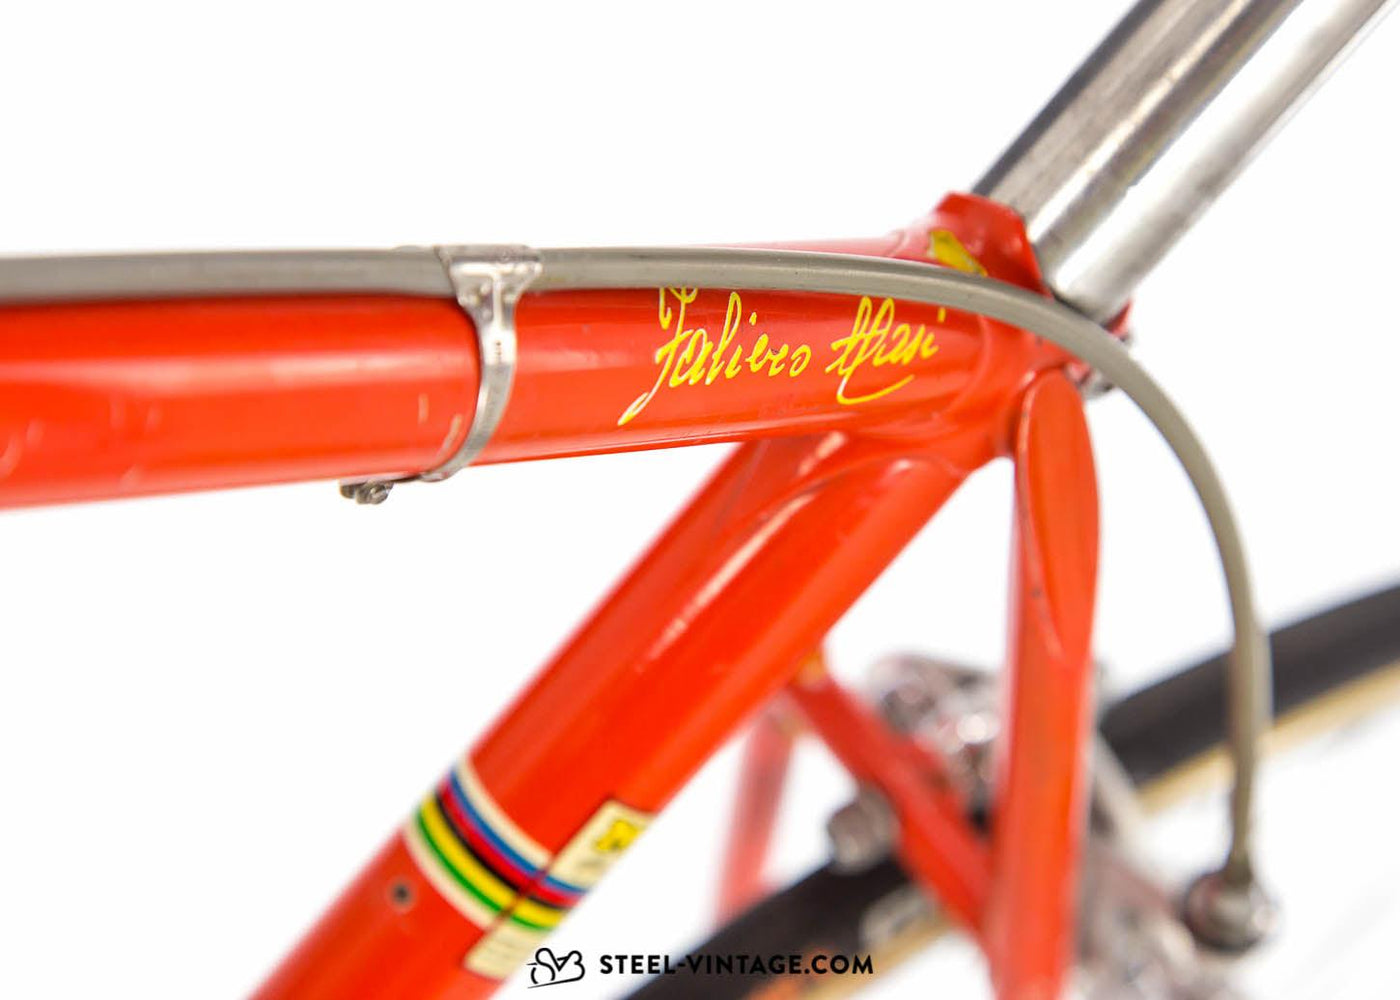 Faliero Masi Gran Criterium Classic Road Bike 1973 - Steel Vintage Bikes